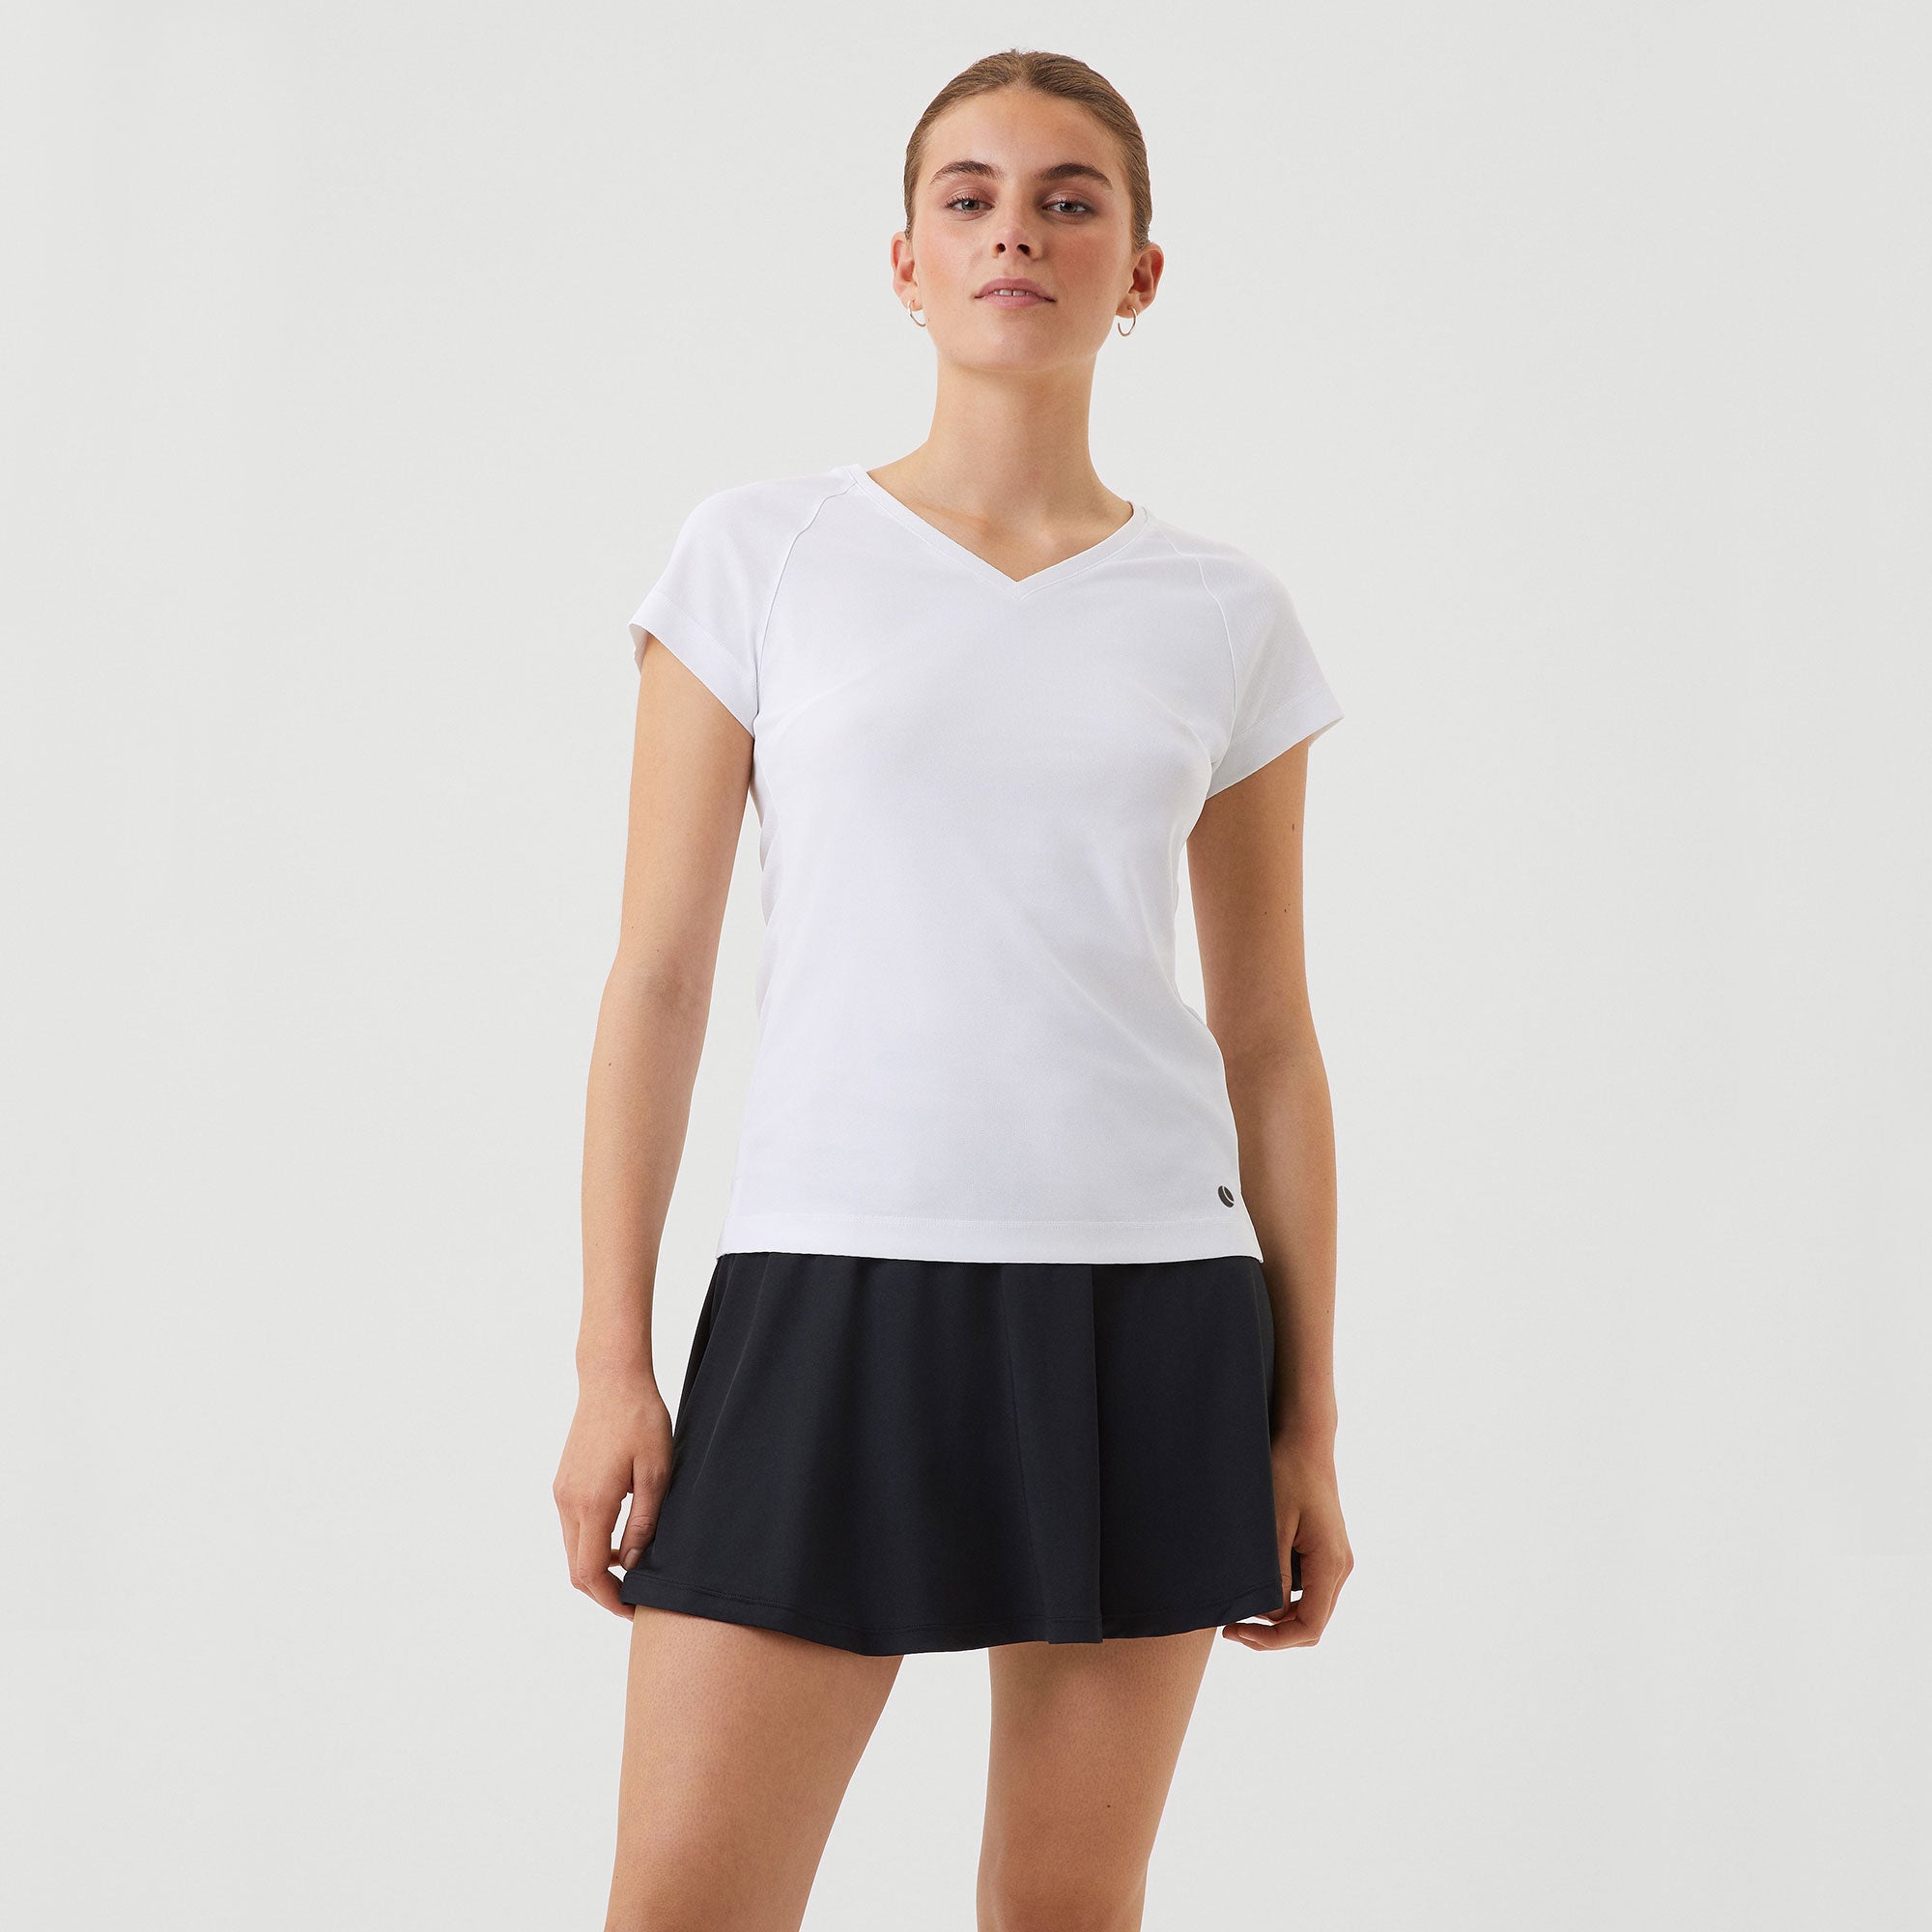 Björn Borg Ace Women's Tennis Shirt - White (1)